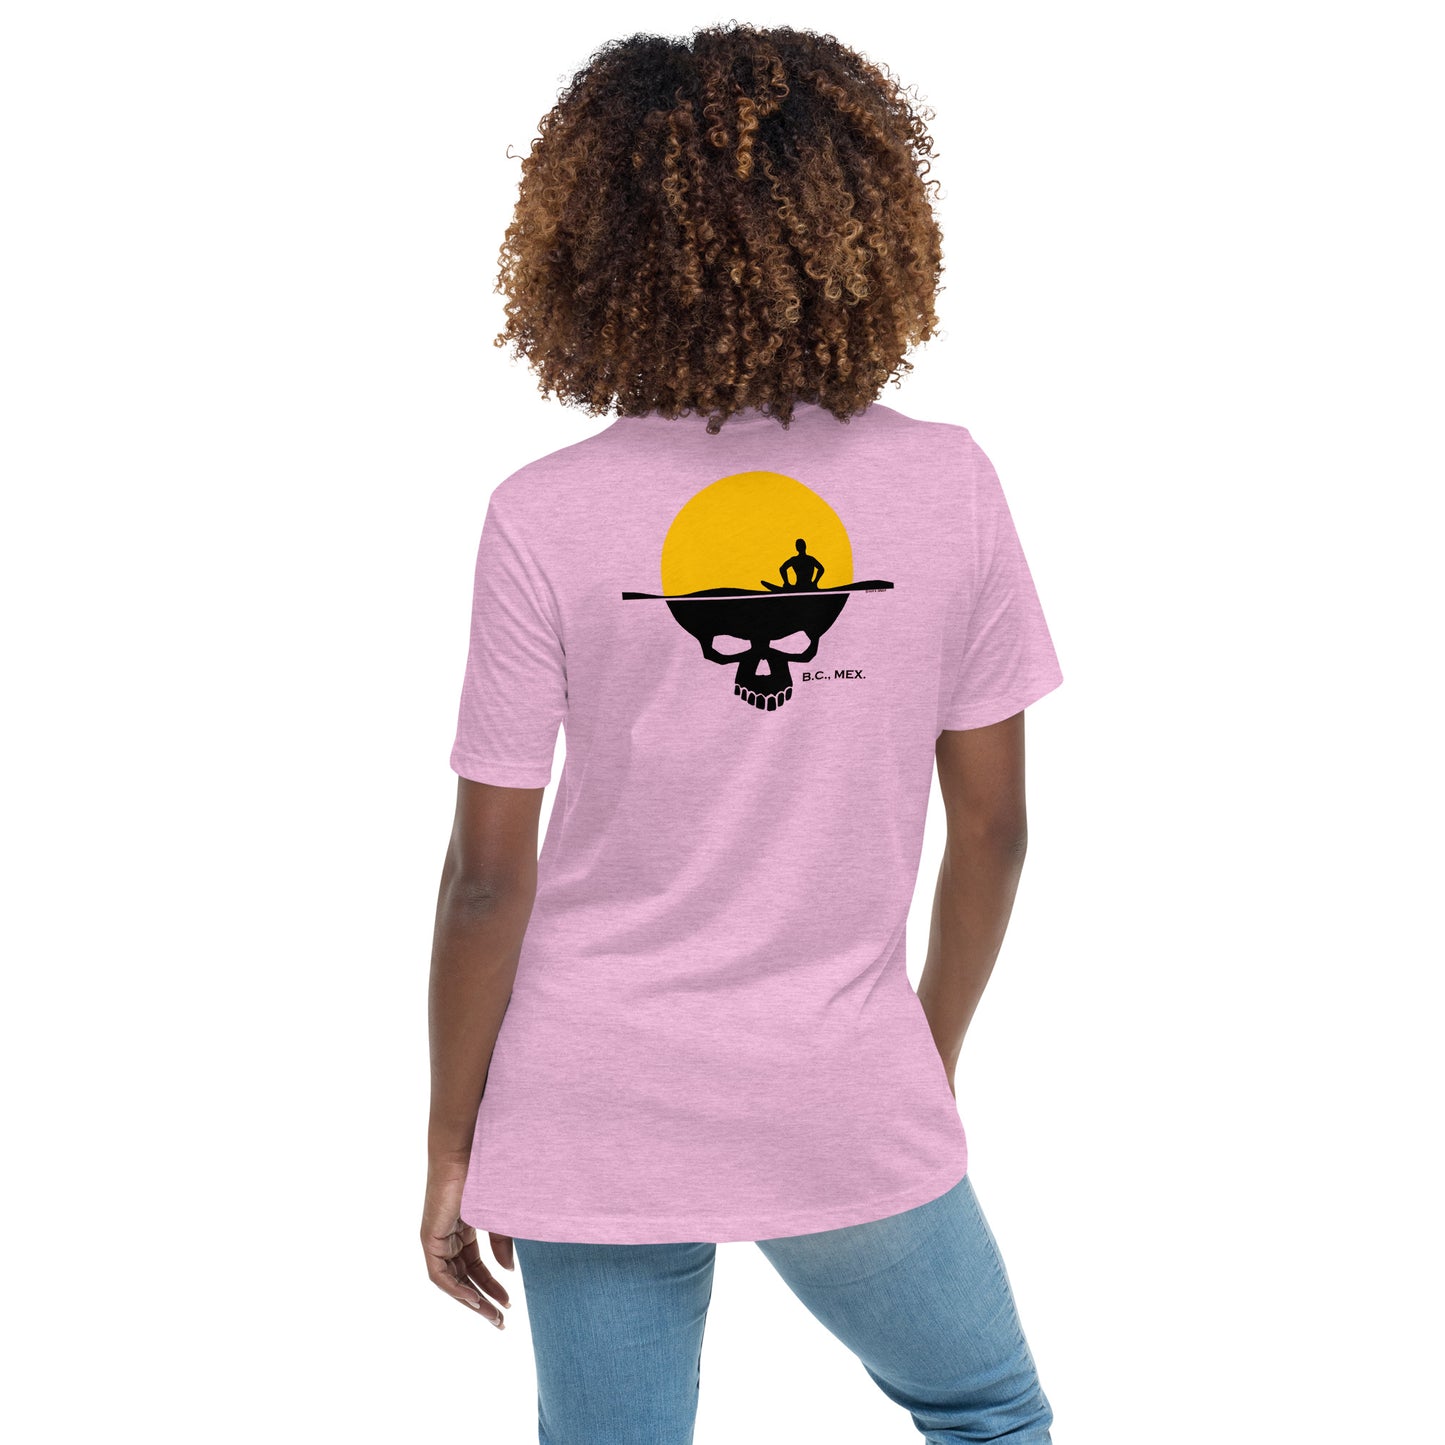 Women's Relaxed T-Shirt - Skull Sun